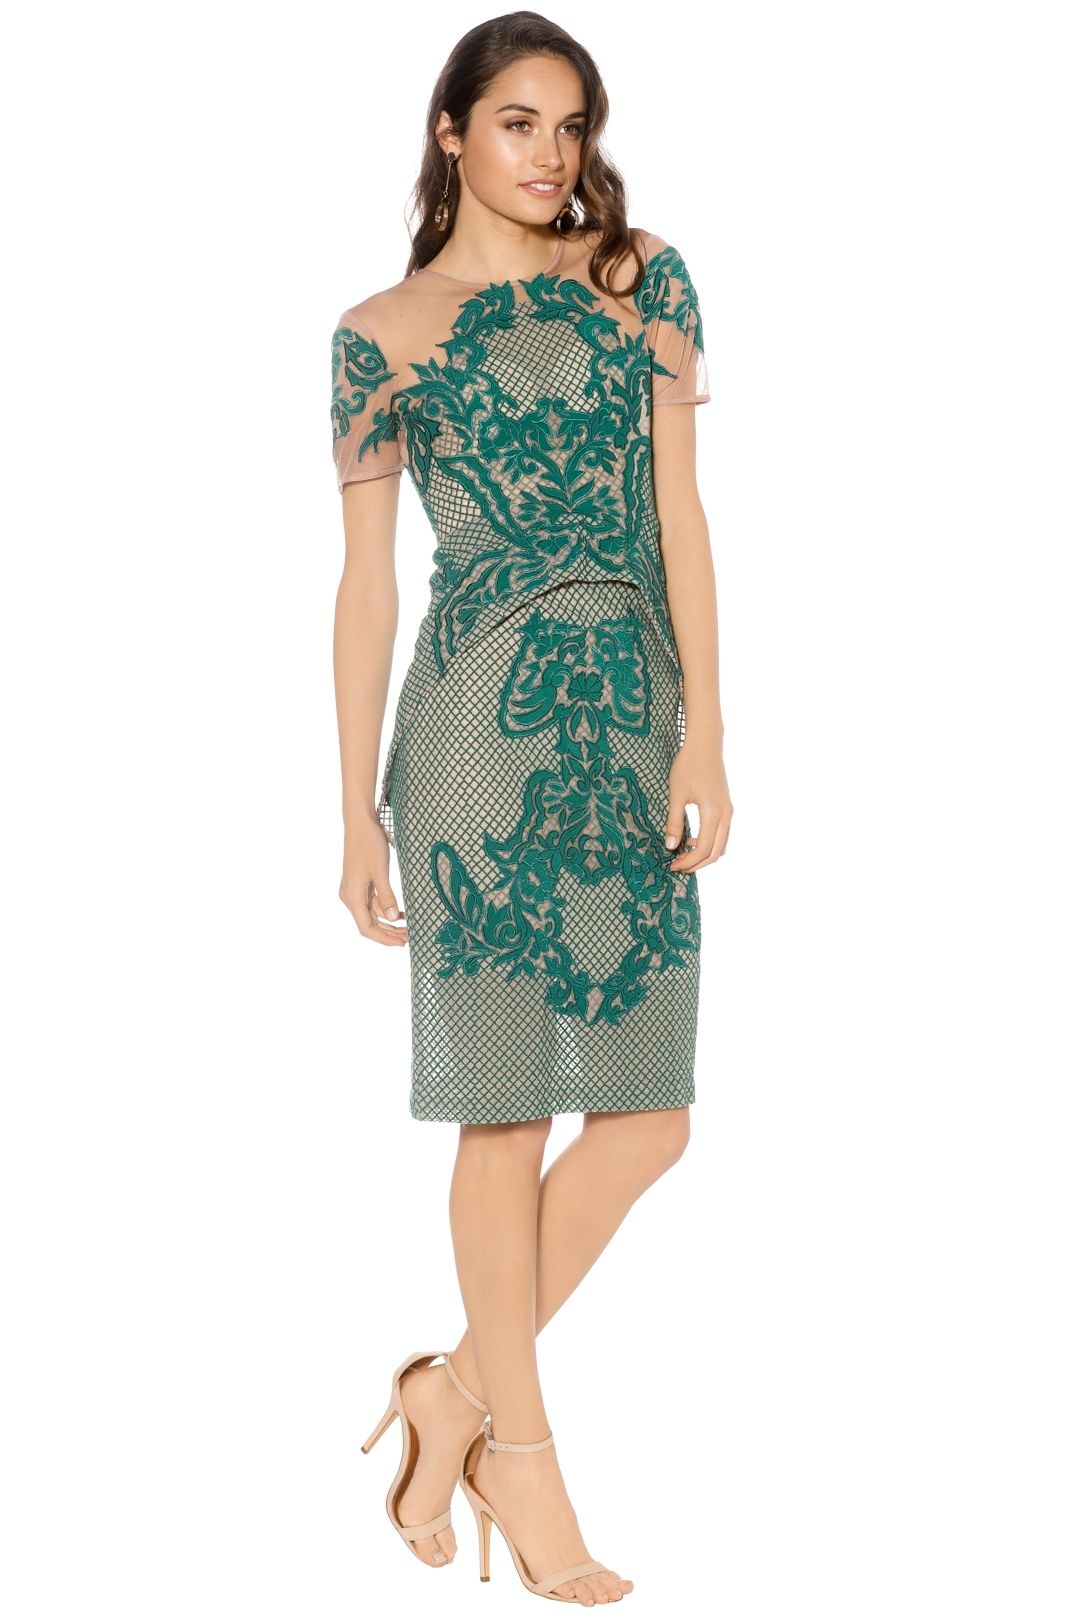 Thurley - Rosetta Stone Dress - Emerald - Side